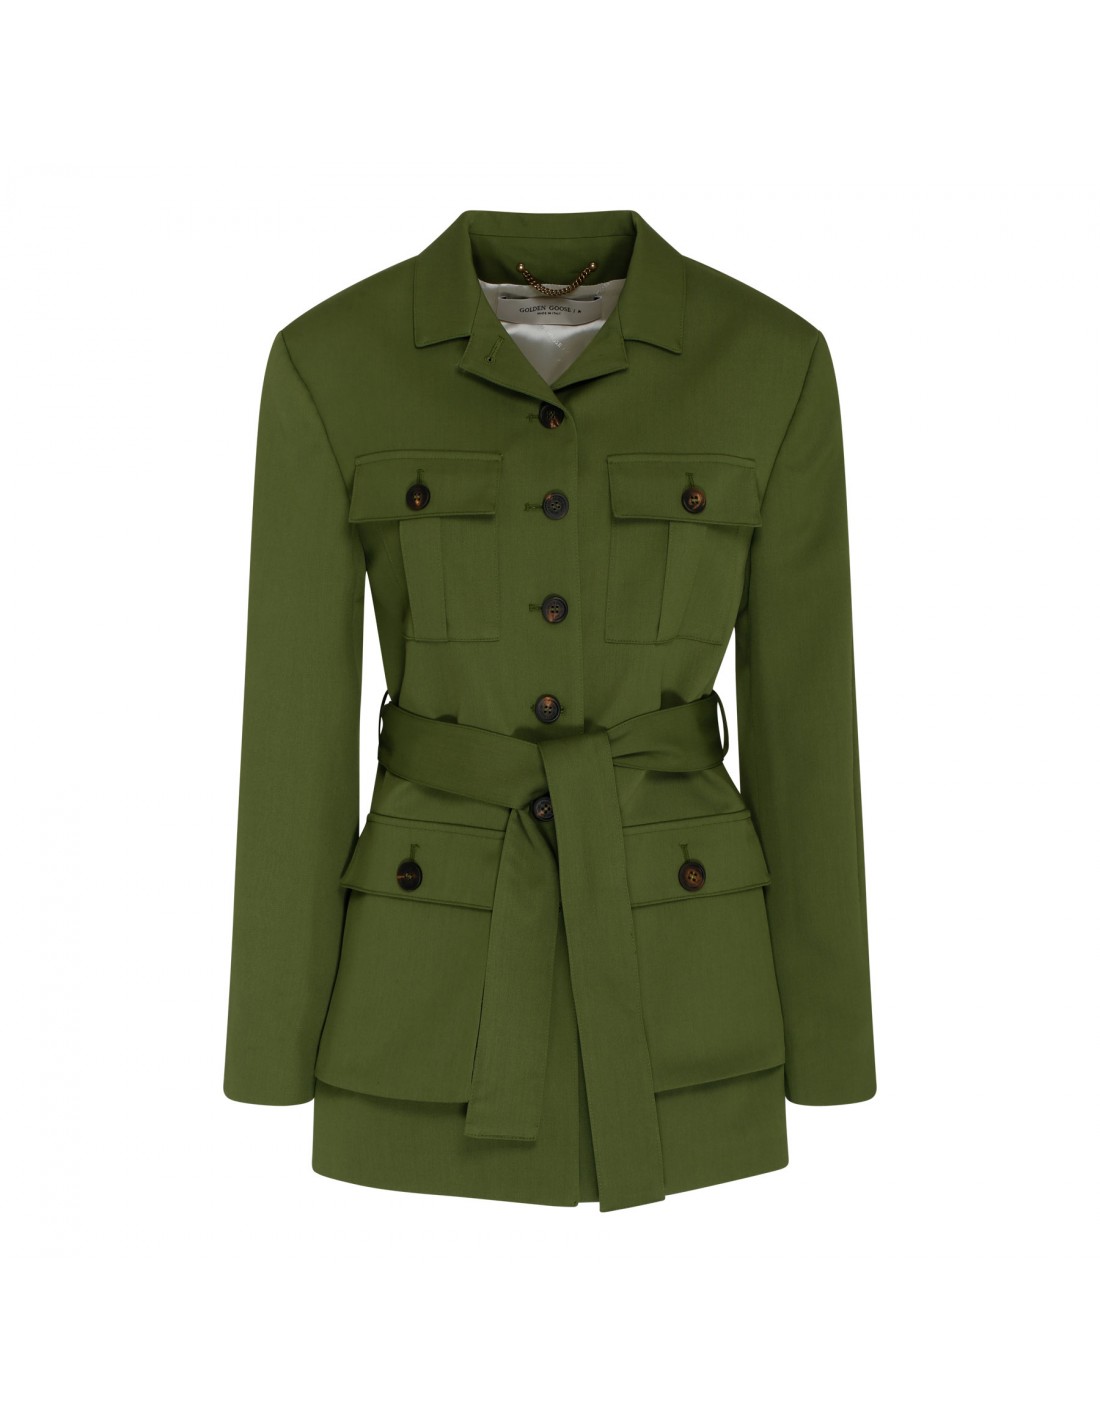 Green light wool blend field jacket